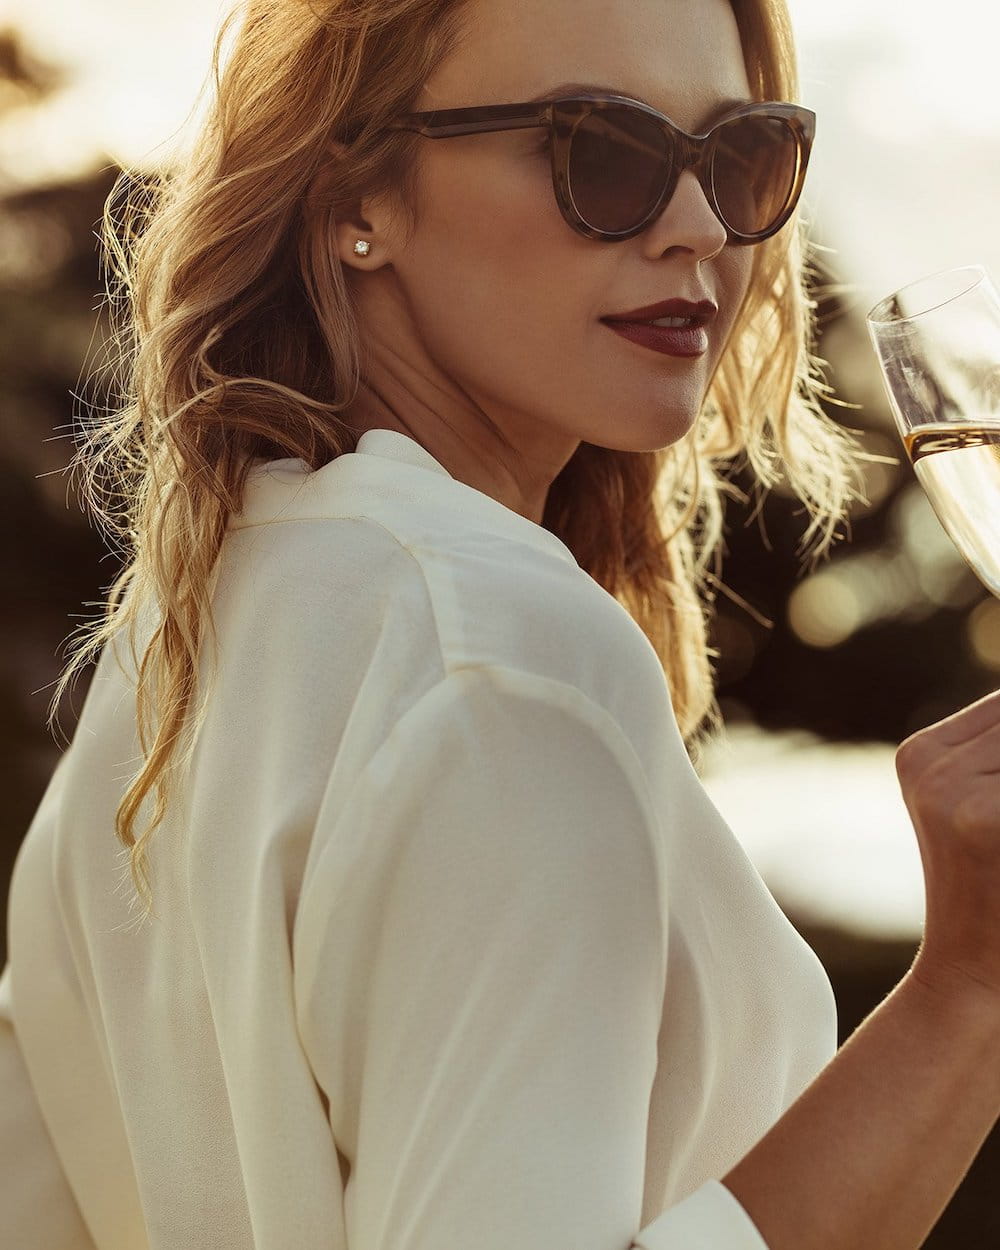 Beautiful microneedling female model in a white blouse